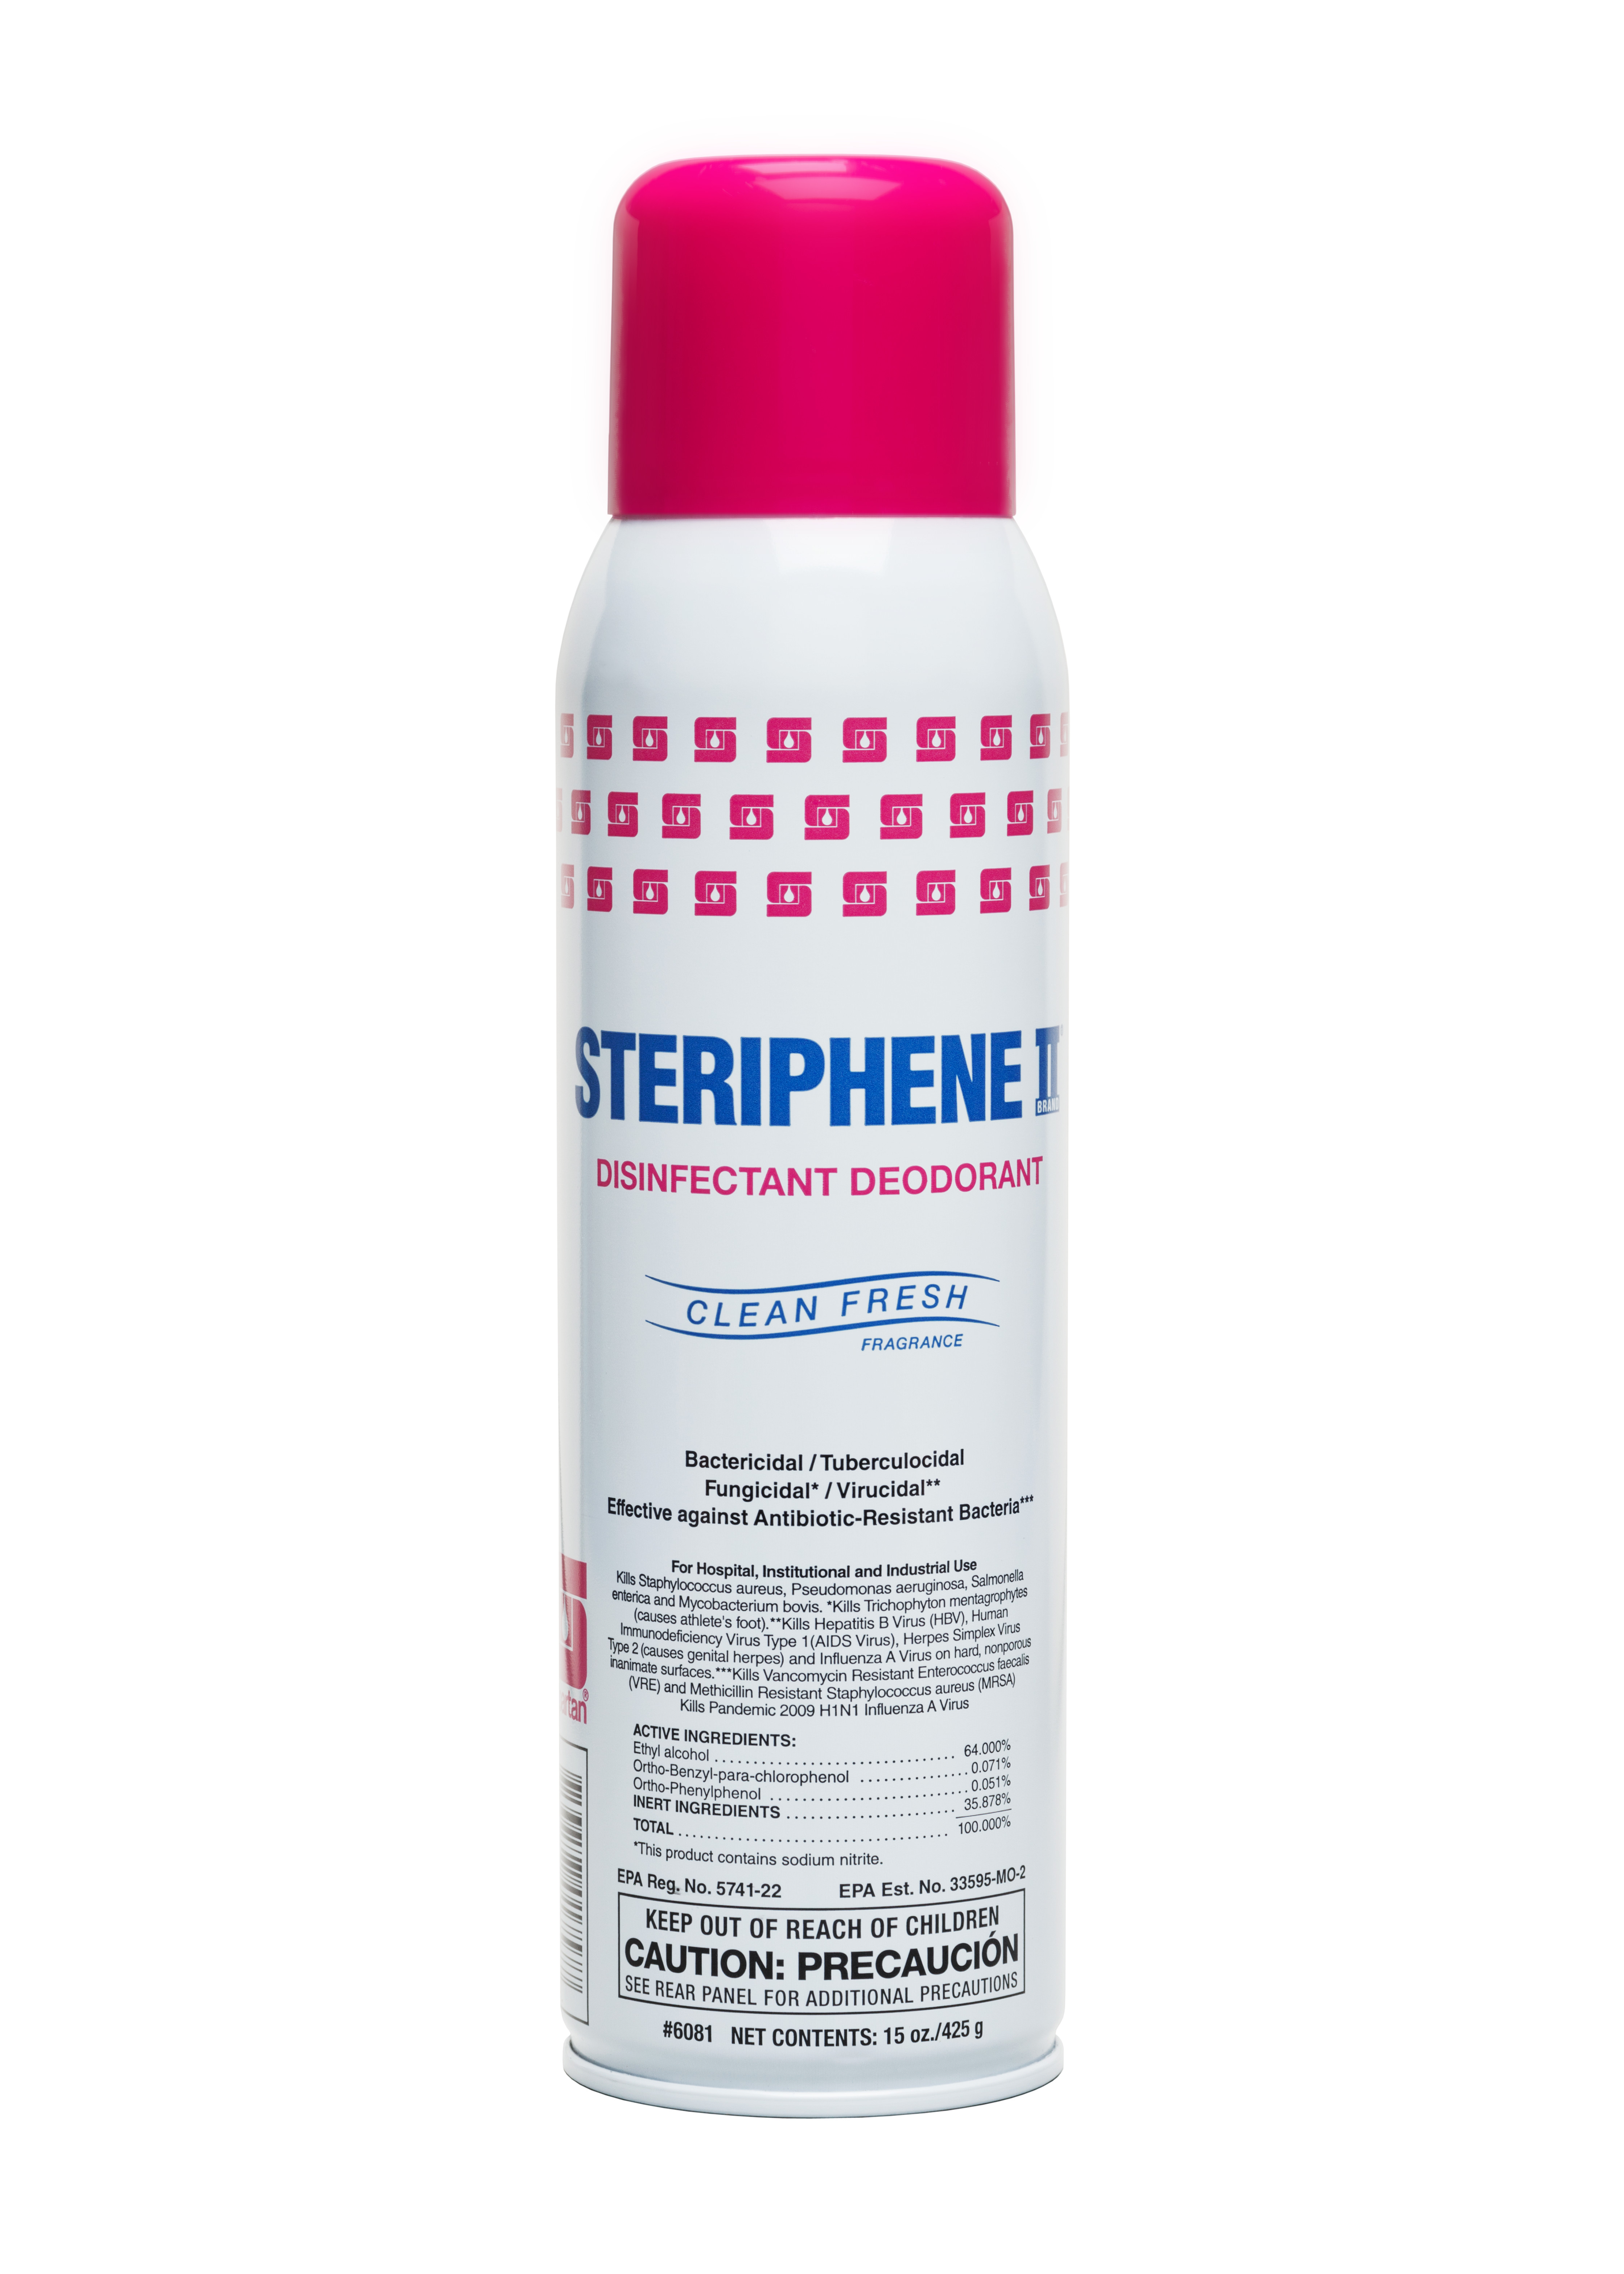 Spartan Chemical Company Steriphene II Brand Disinfectant Deodorant (Clean Fresh Fragrance), 12-20 OZ.CAN